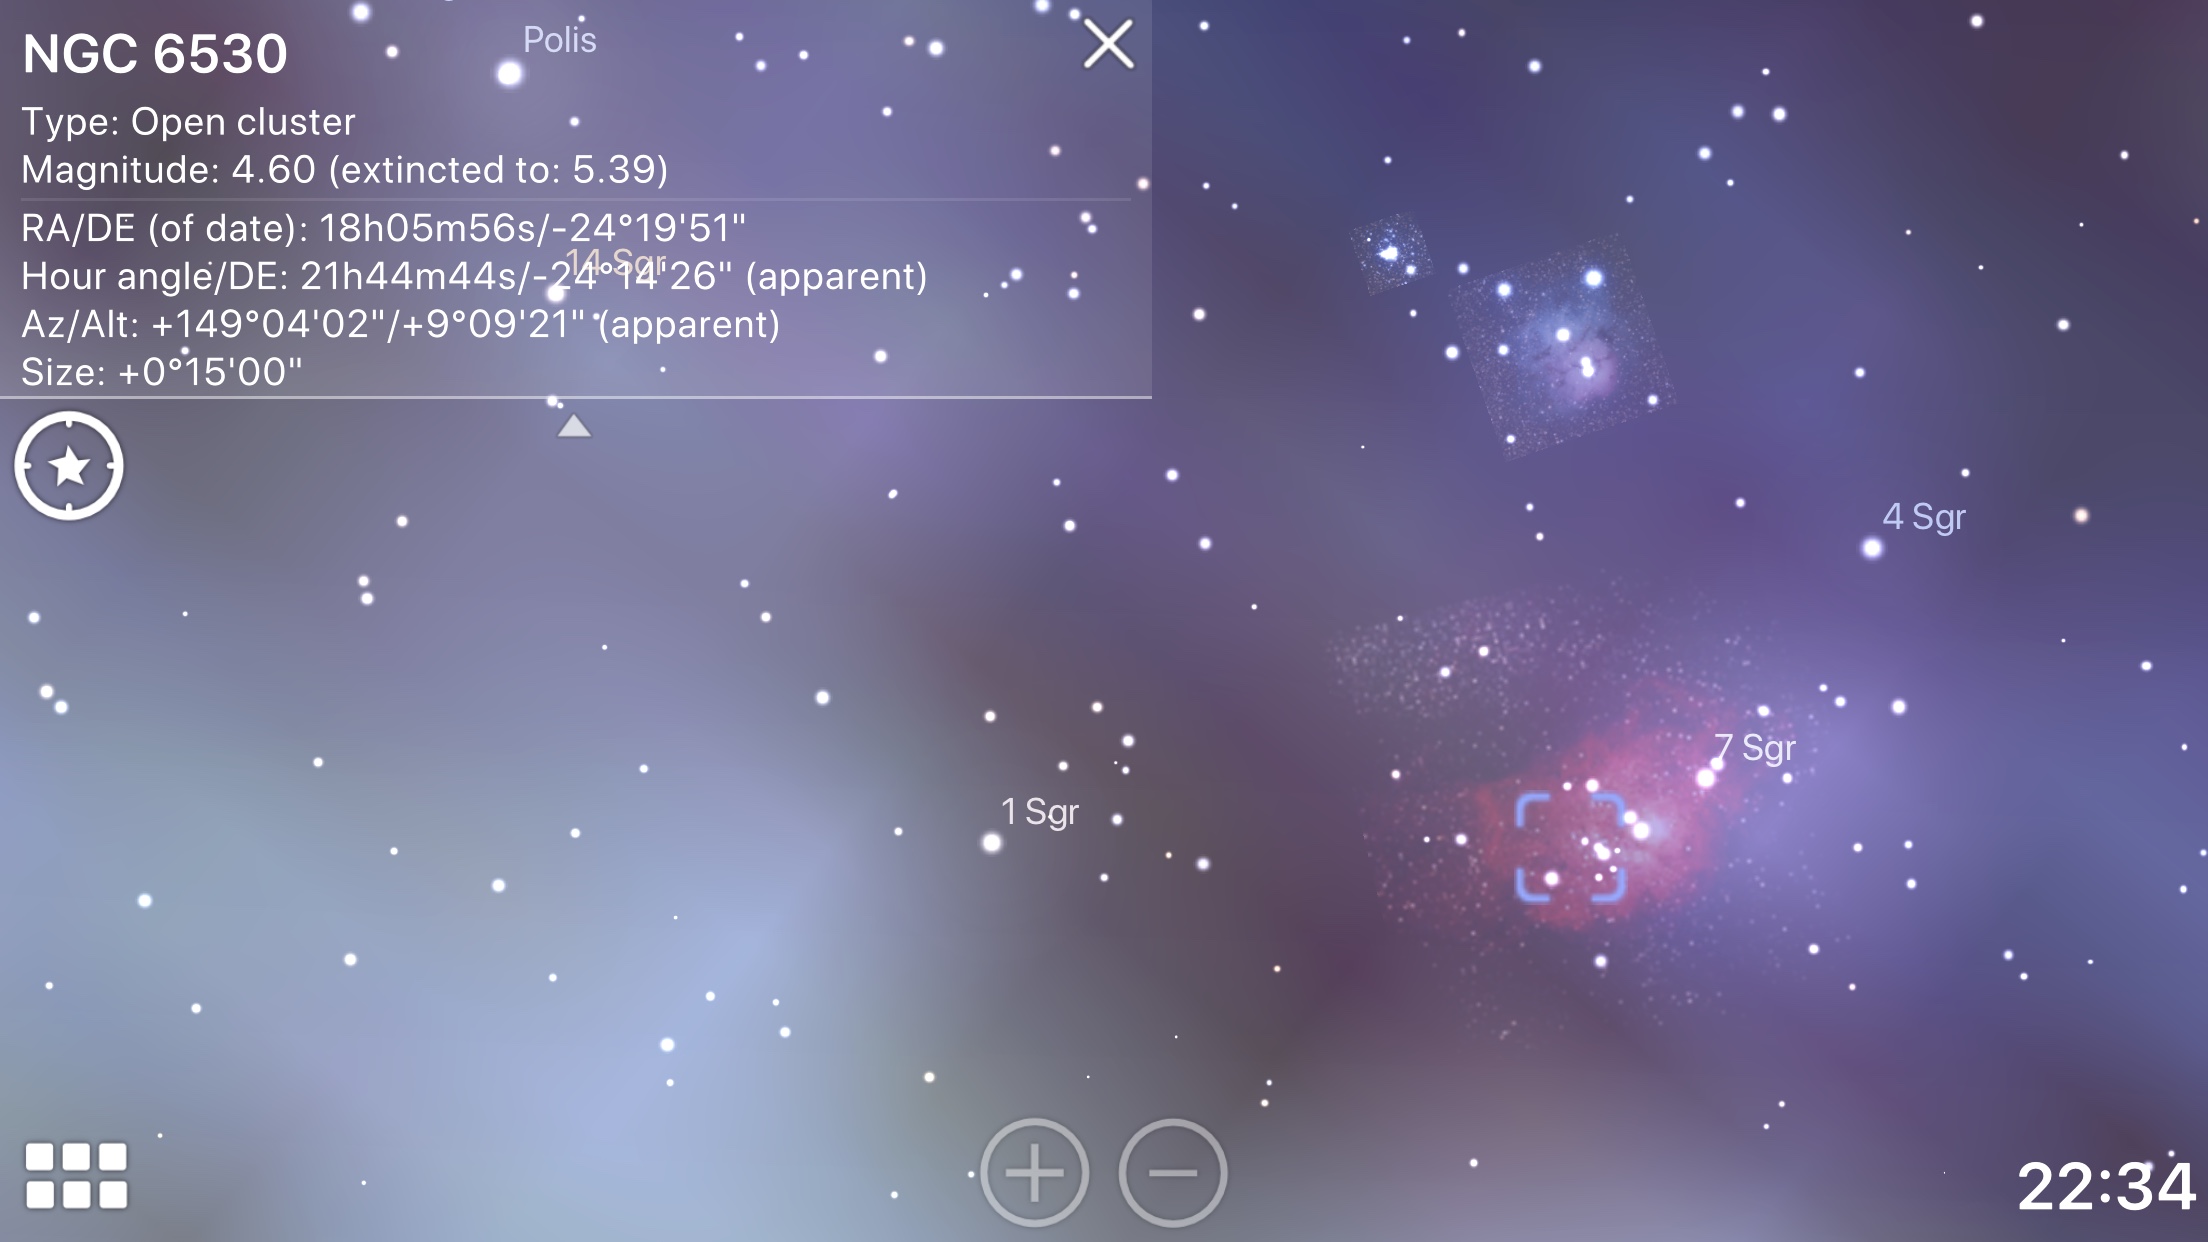 NGC 6530 info in Stellarium iOS app screenshot